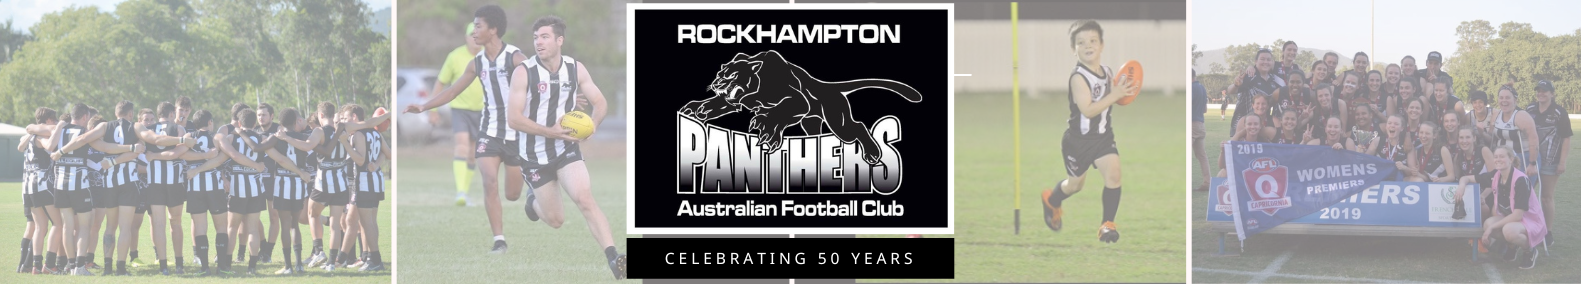 Rockhampton Panthers AFC